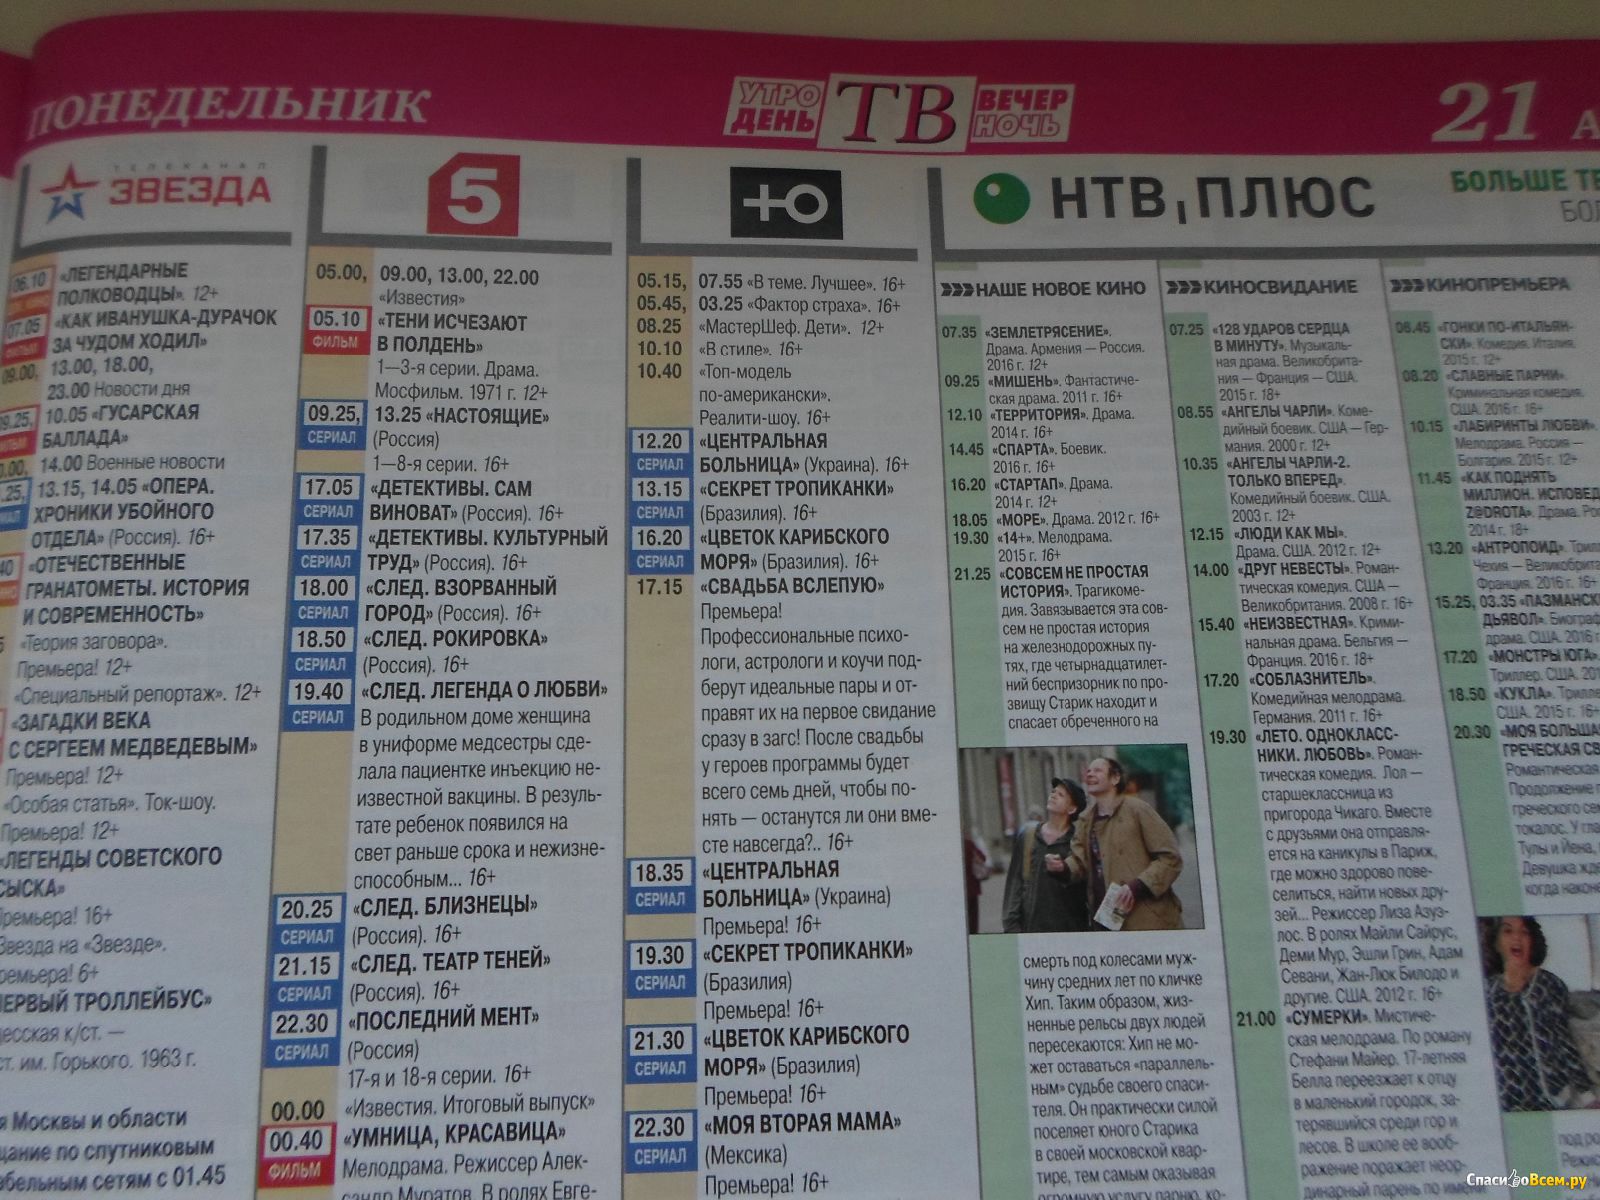 Телеканал звезда программа передач на неделю москва